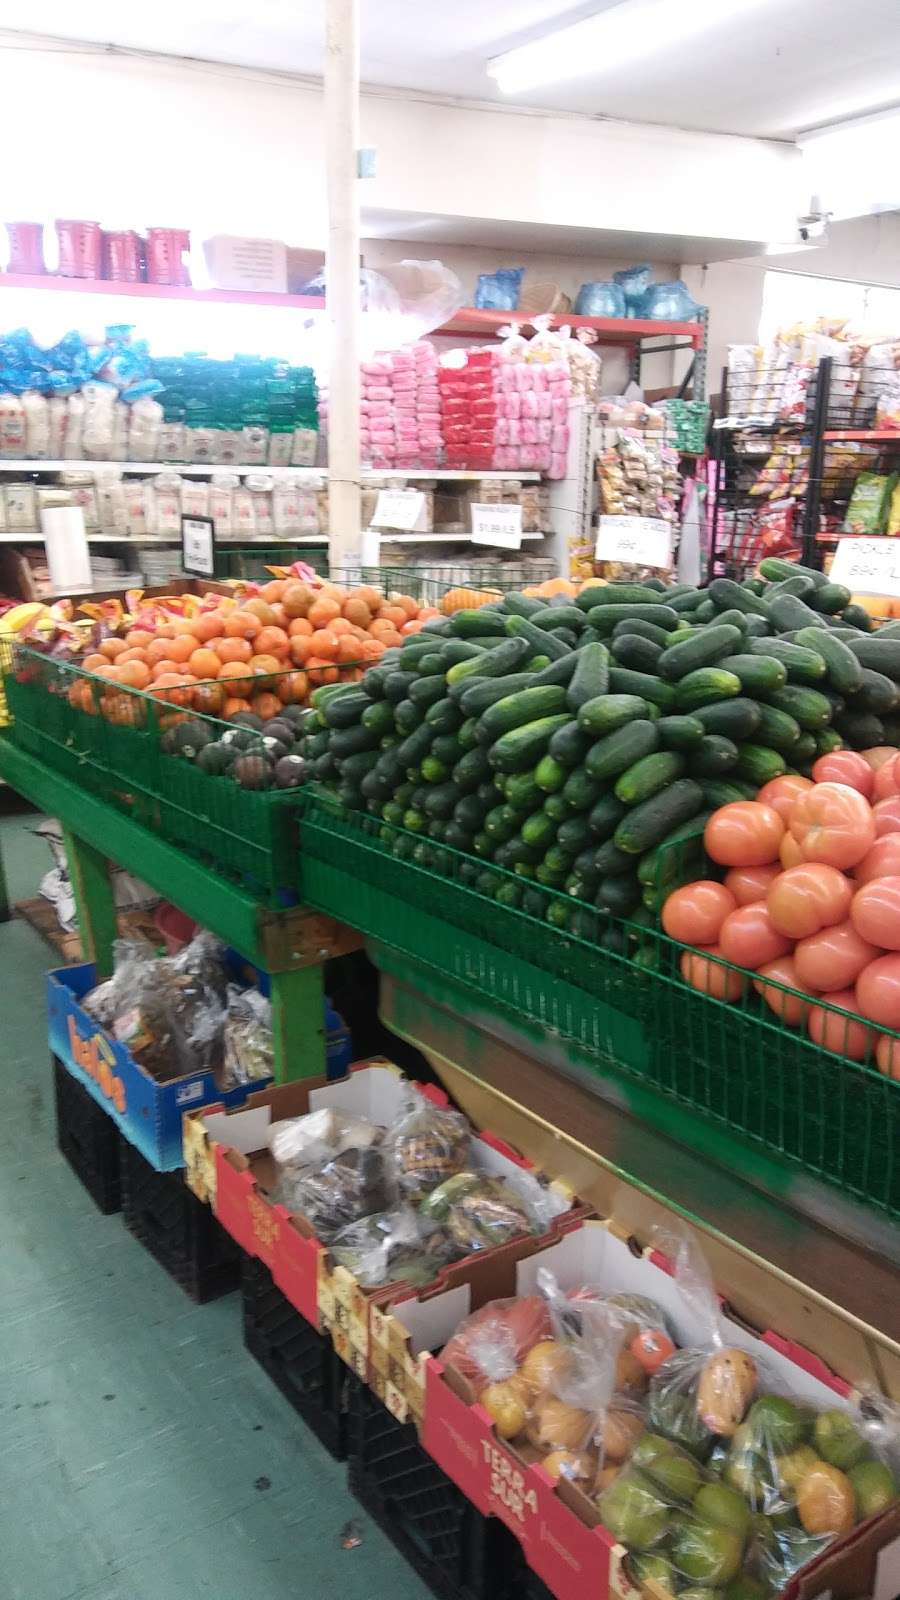 Thien Thanh Supermarket | 455 Keyes St, San Jose, CA 95112, USA | Phone: (408) 295-1043